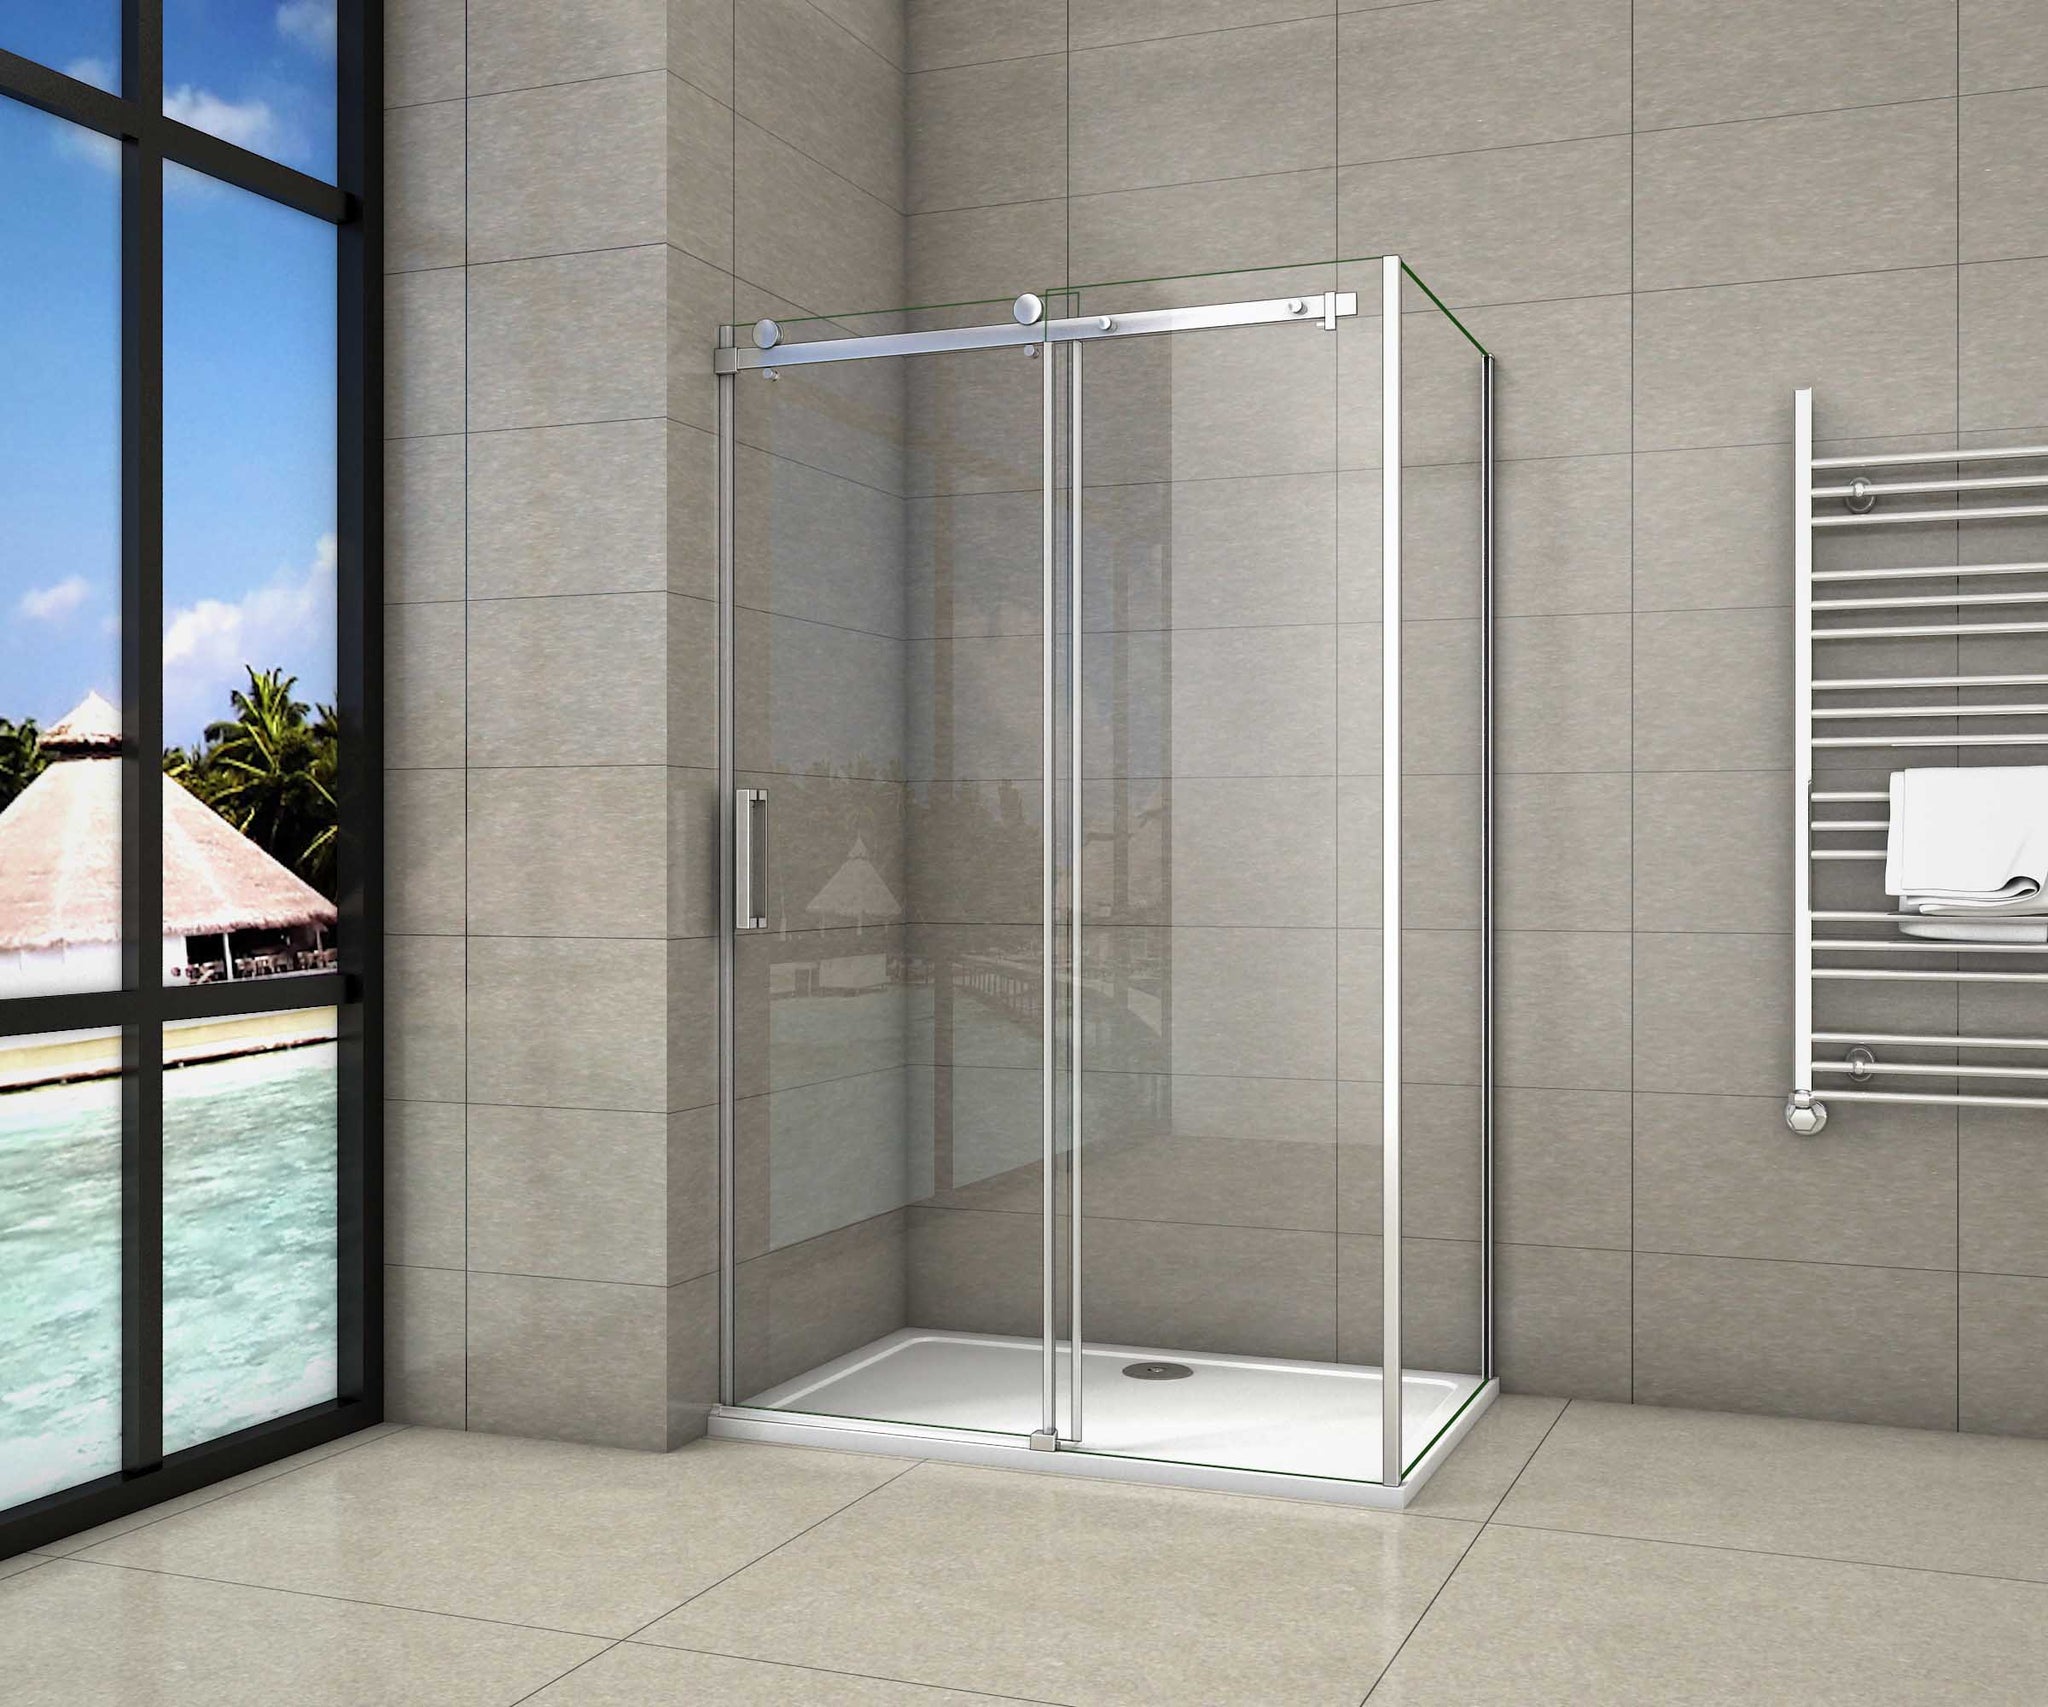 Cabina de ducha, fontal + panel lateral, mampara de 8 mm con tratamiento antical cristal templado